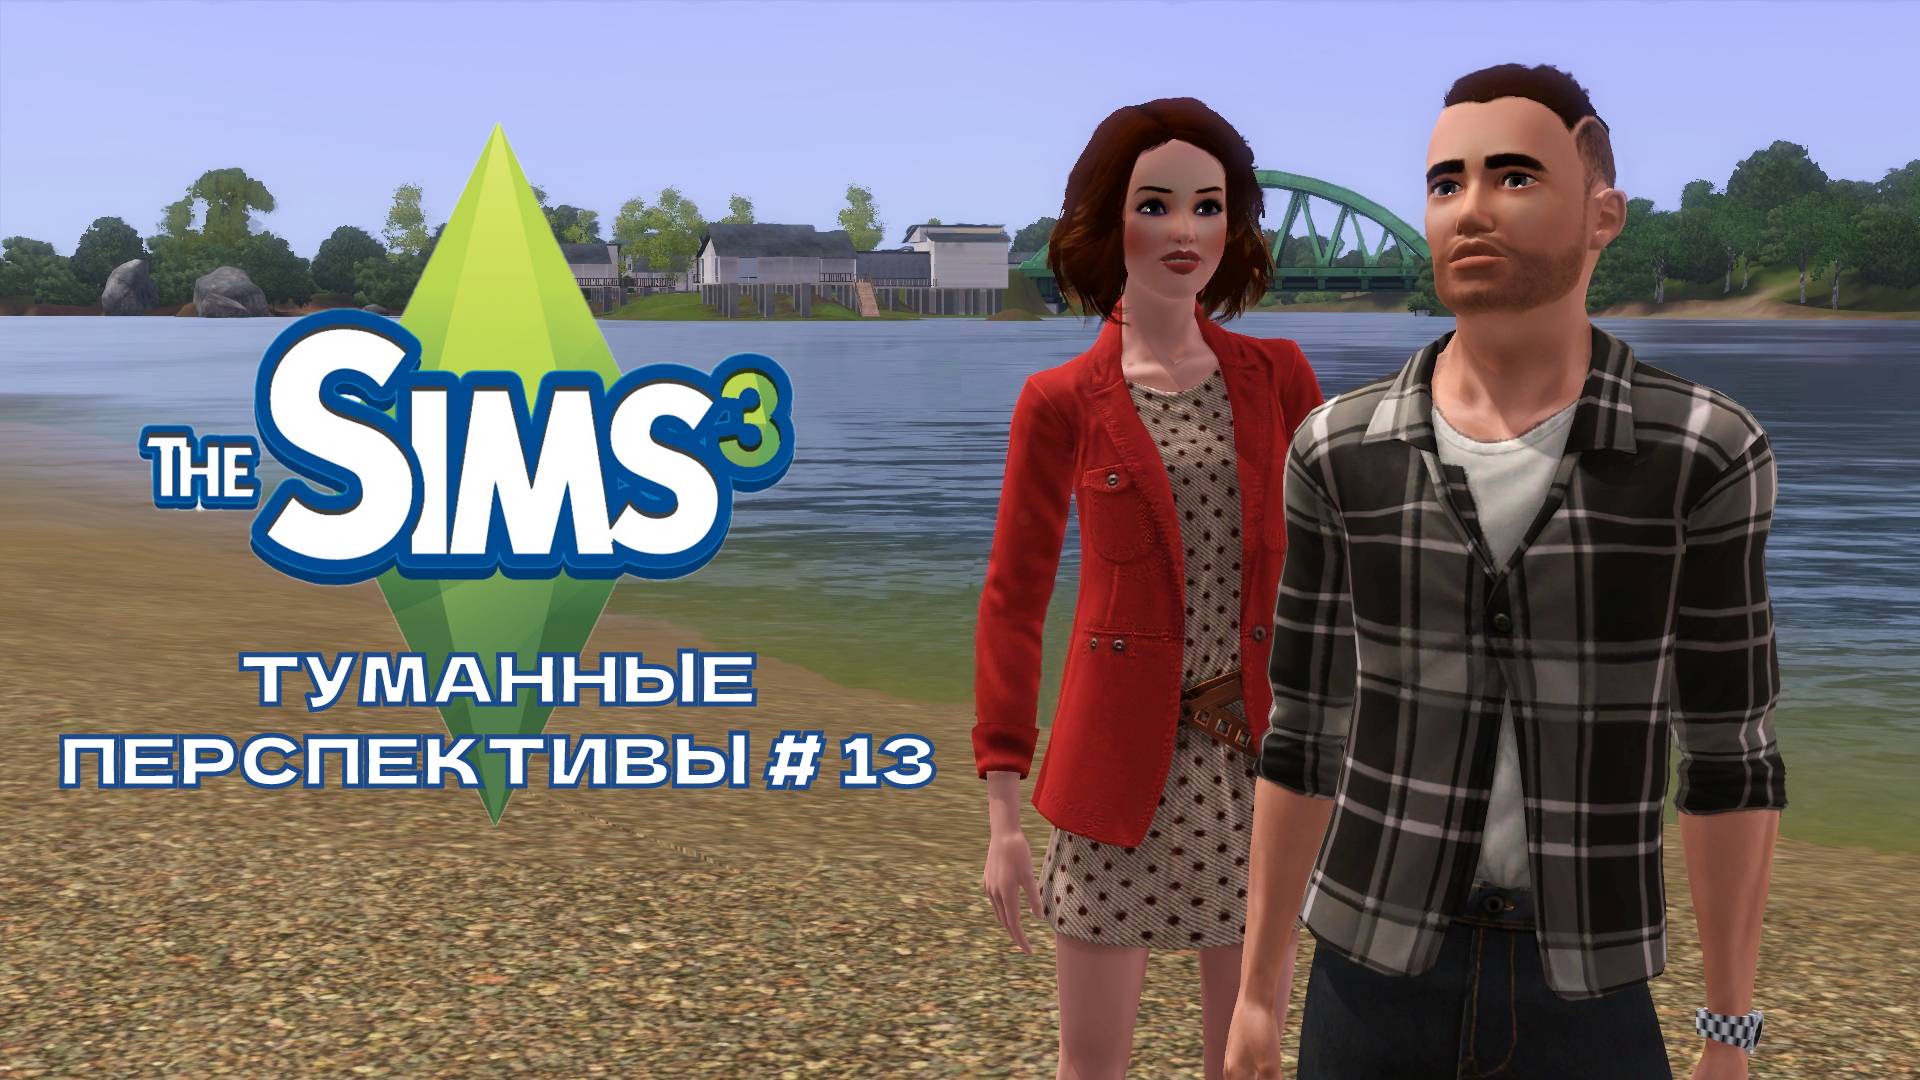 The Sims 3. Туманные перспективы #13. Первая вечеринка)